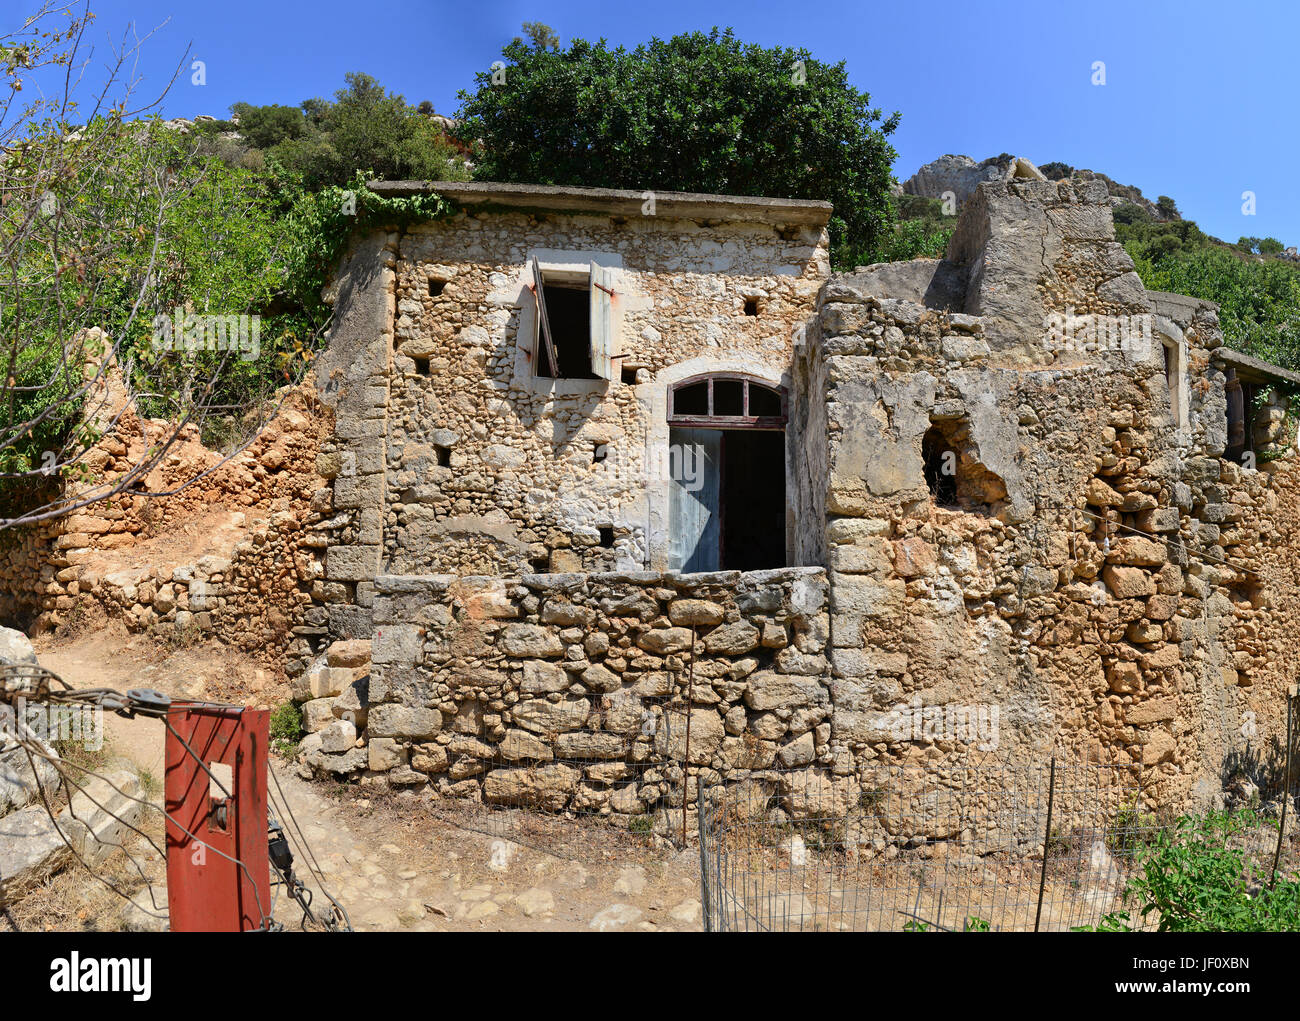 Casa griega antigua fotografías e imágenes de alta resolución - Alamy